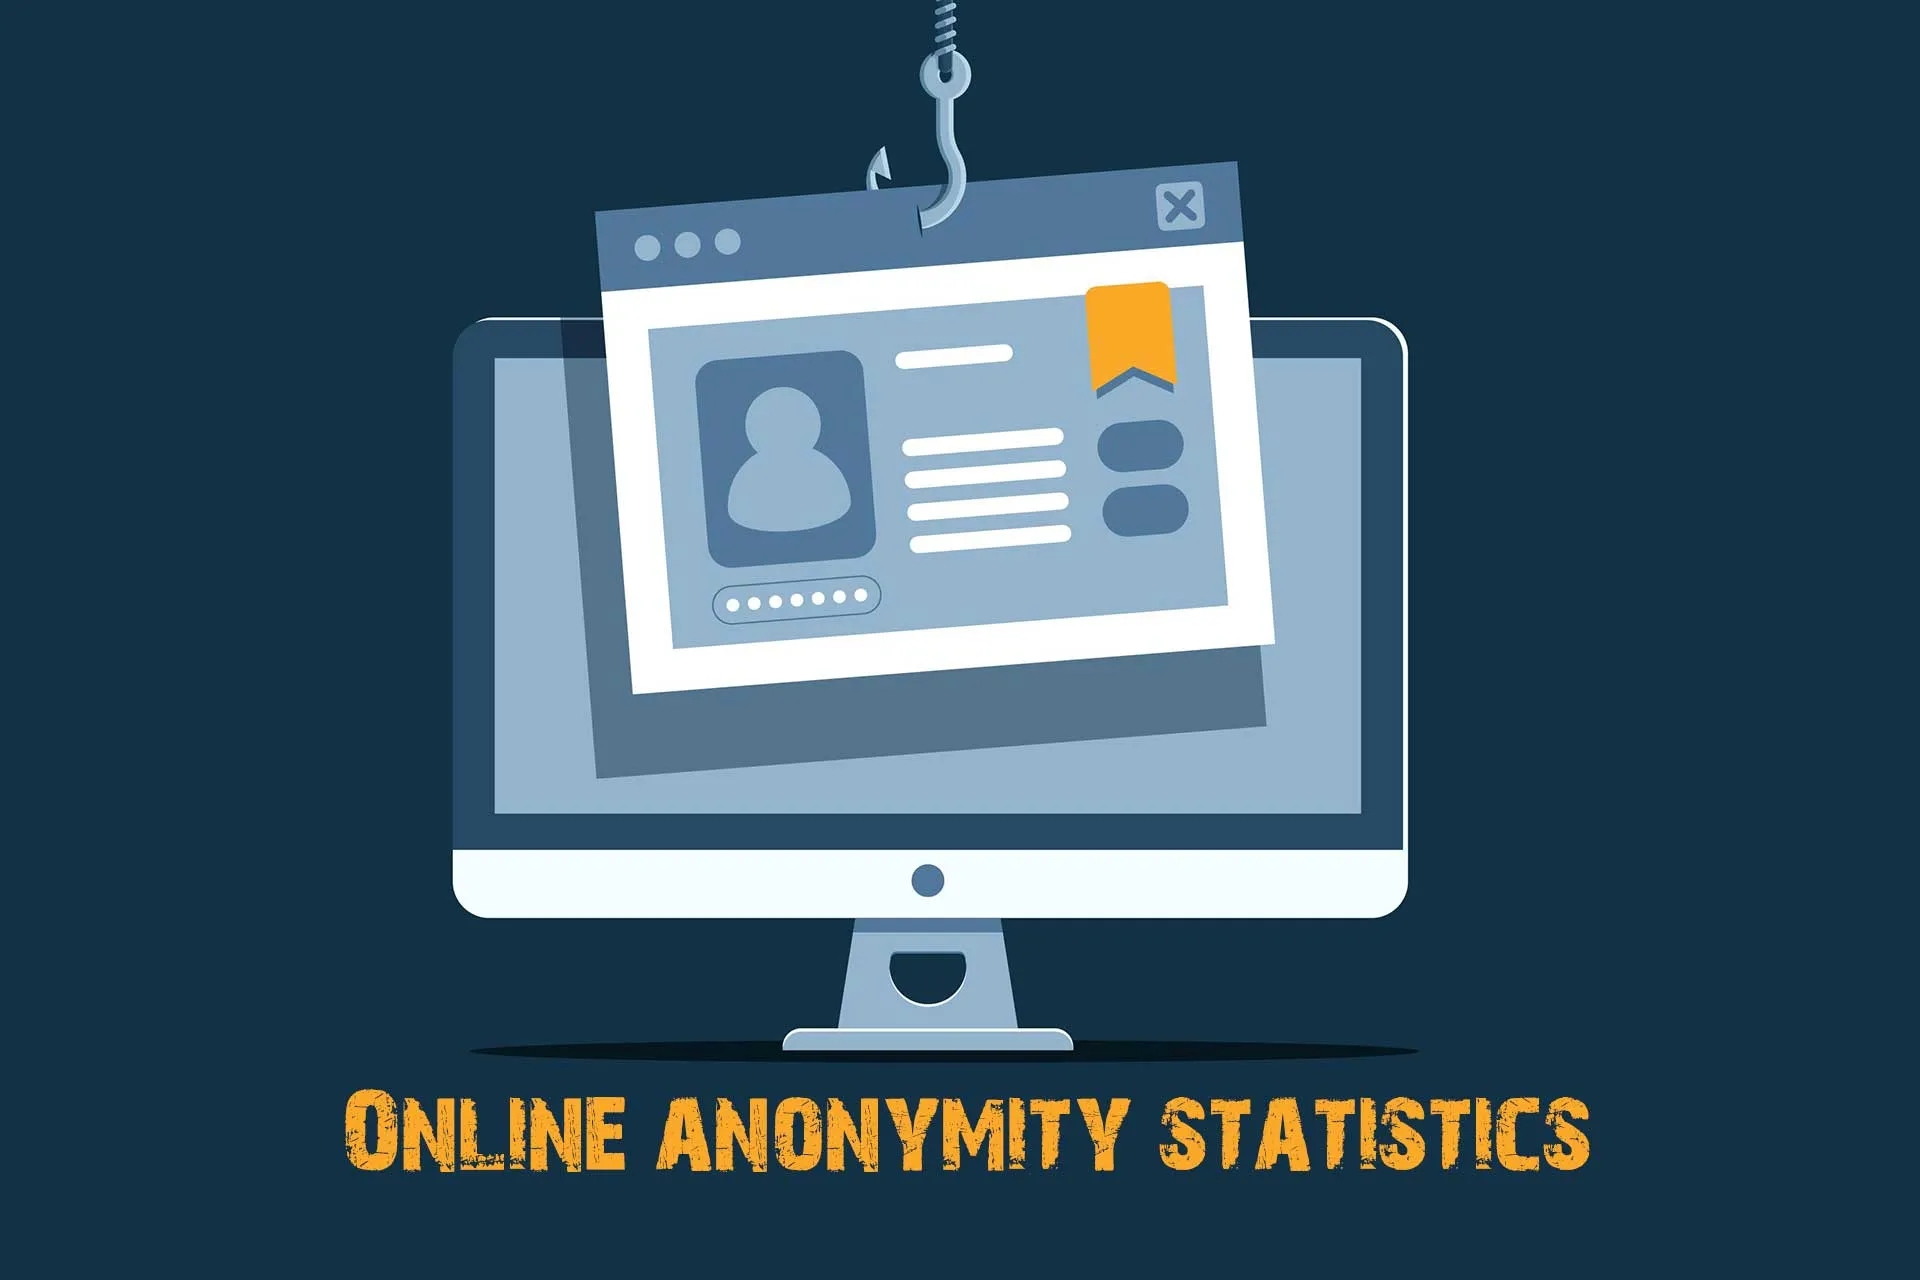 Online anonymity statistics